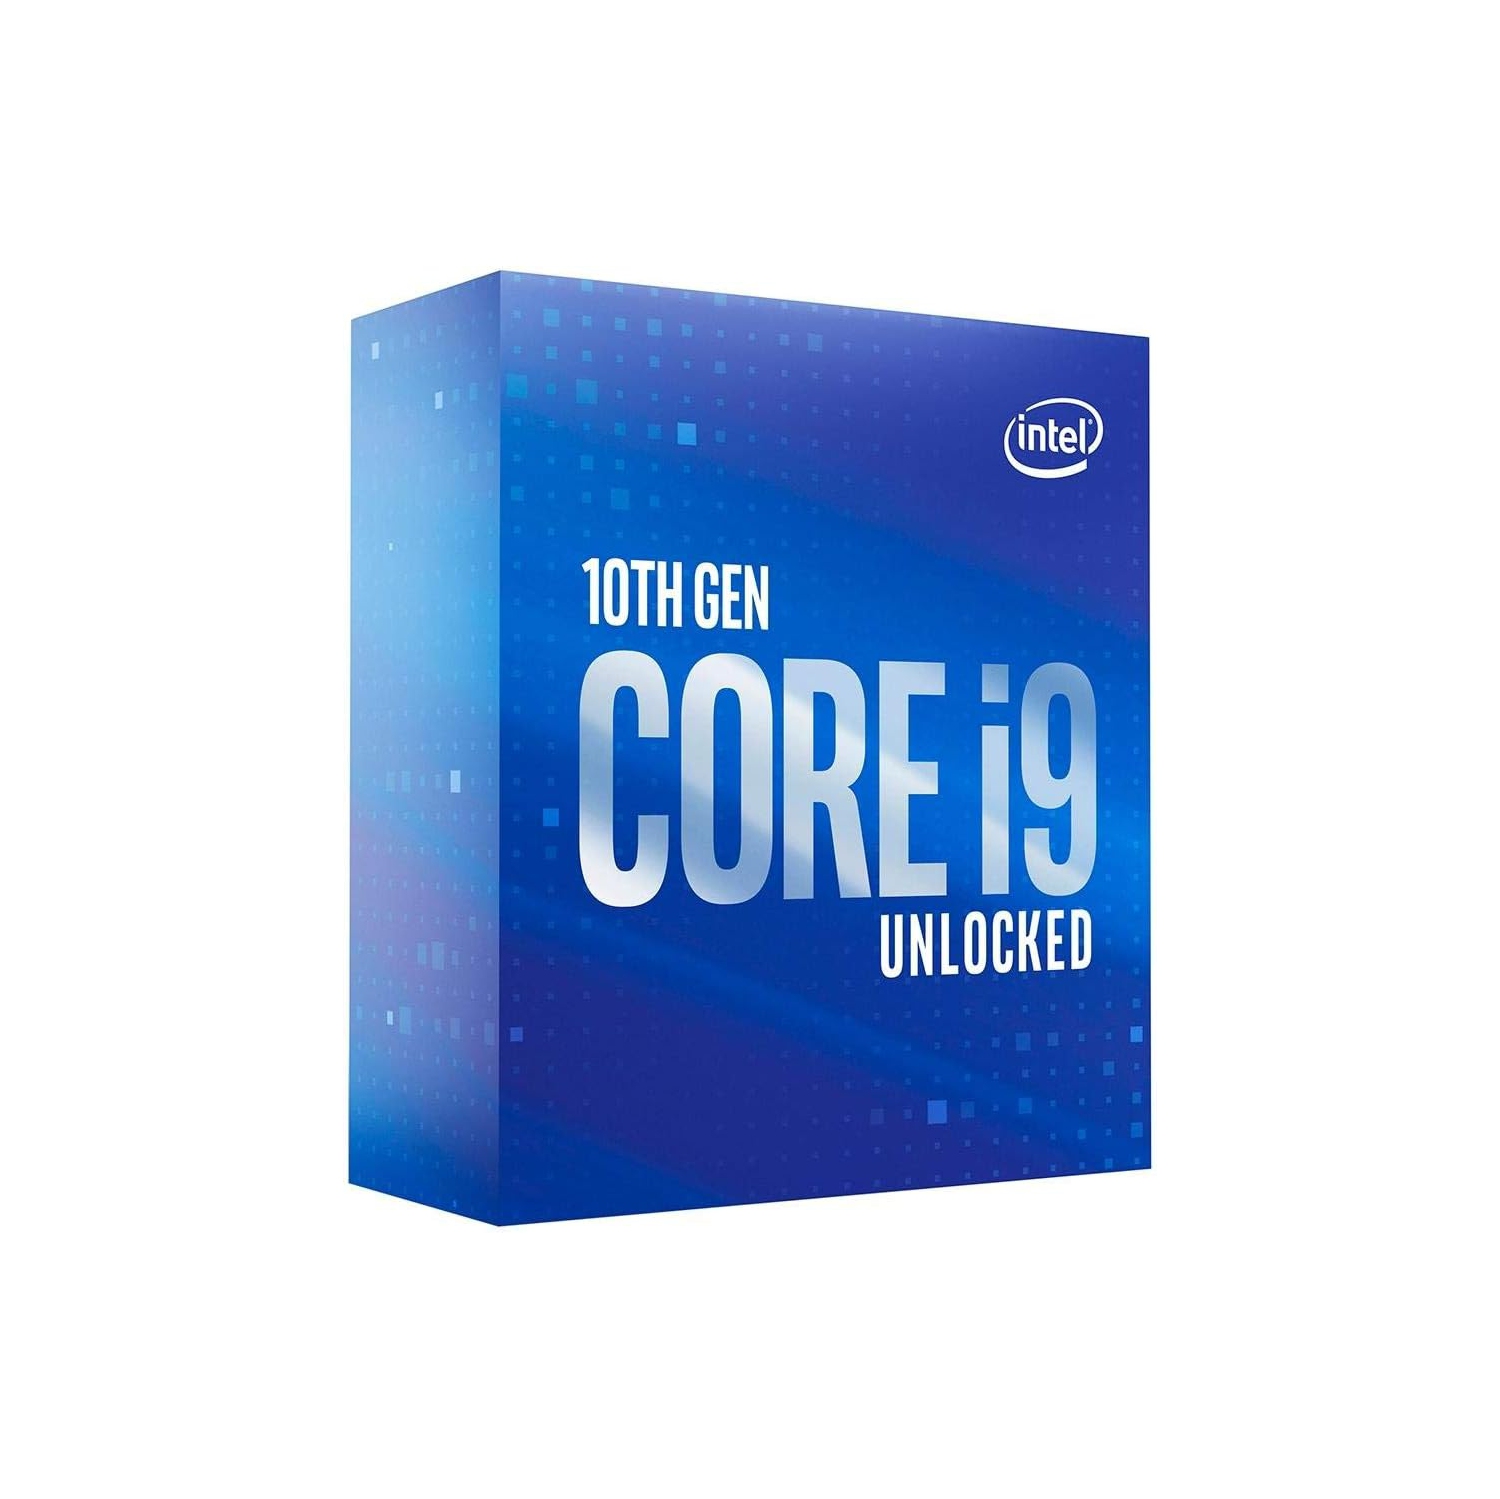 Refurbished (Good) Intel Core i9-10850K Desktop Processor 10 Cores up to 5.2 GHz Unlocked LGA1200 (Intel® 400 Series & Select 500 Series Chipset)